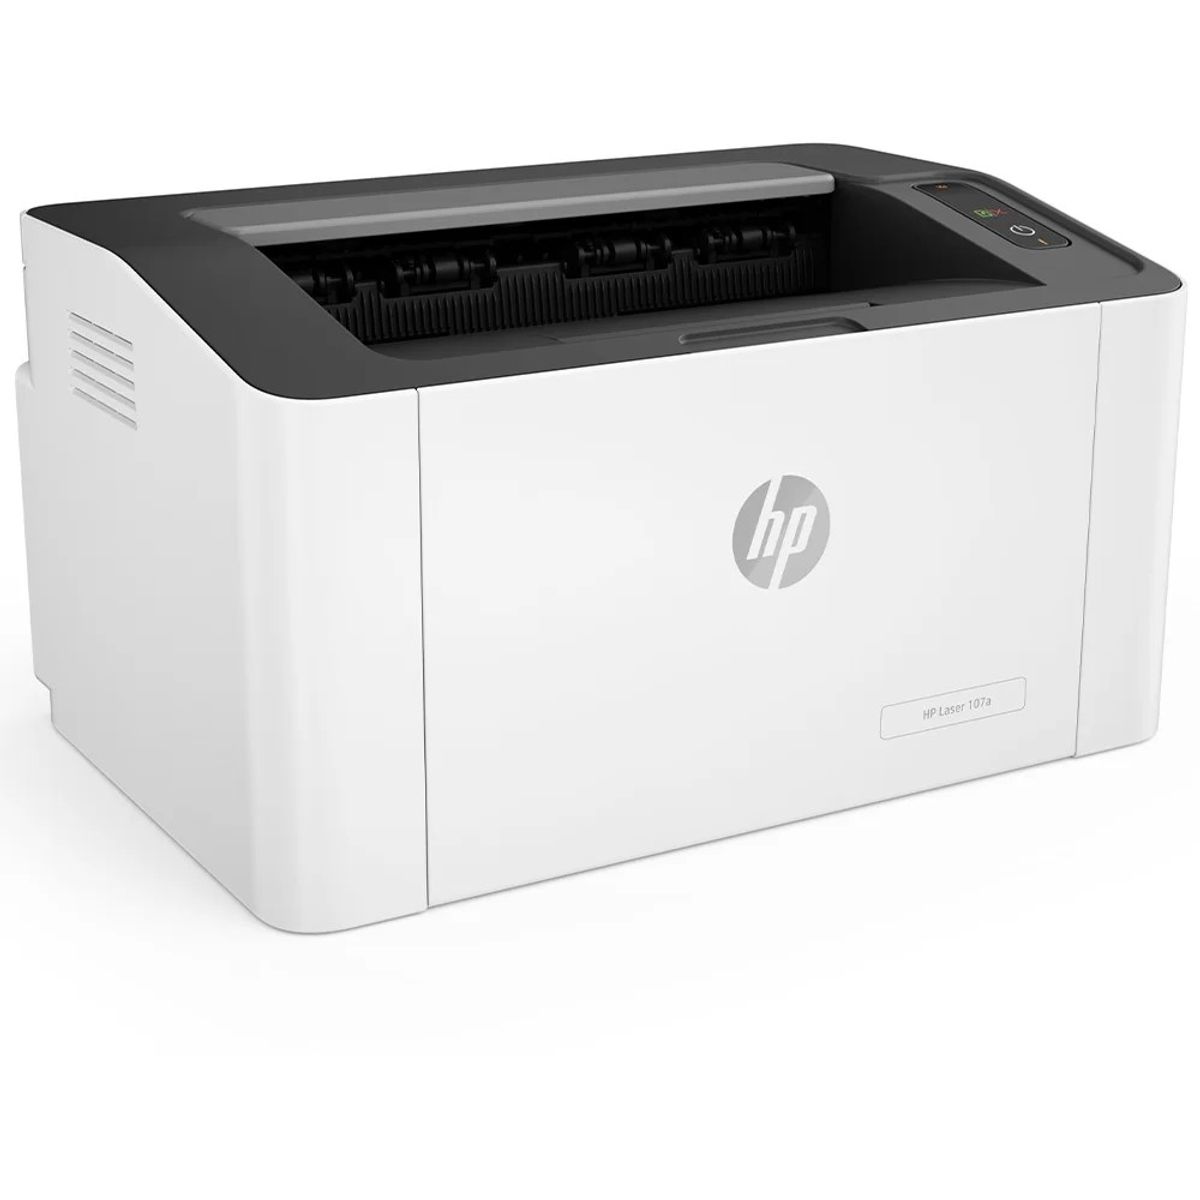 Impressora HP Laser 107A Monocromática 110V - 4ZB77A